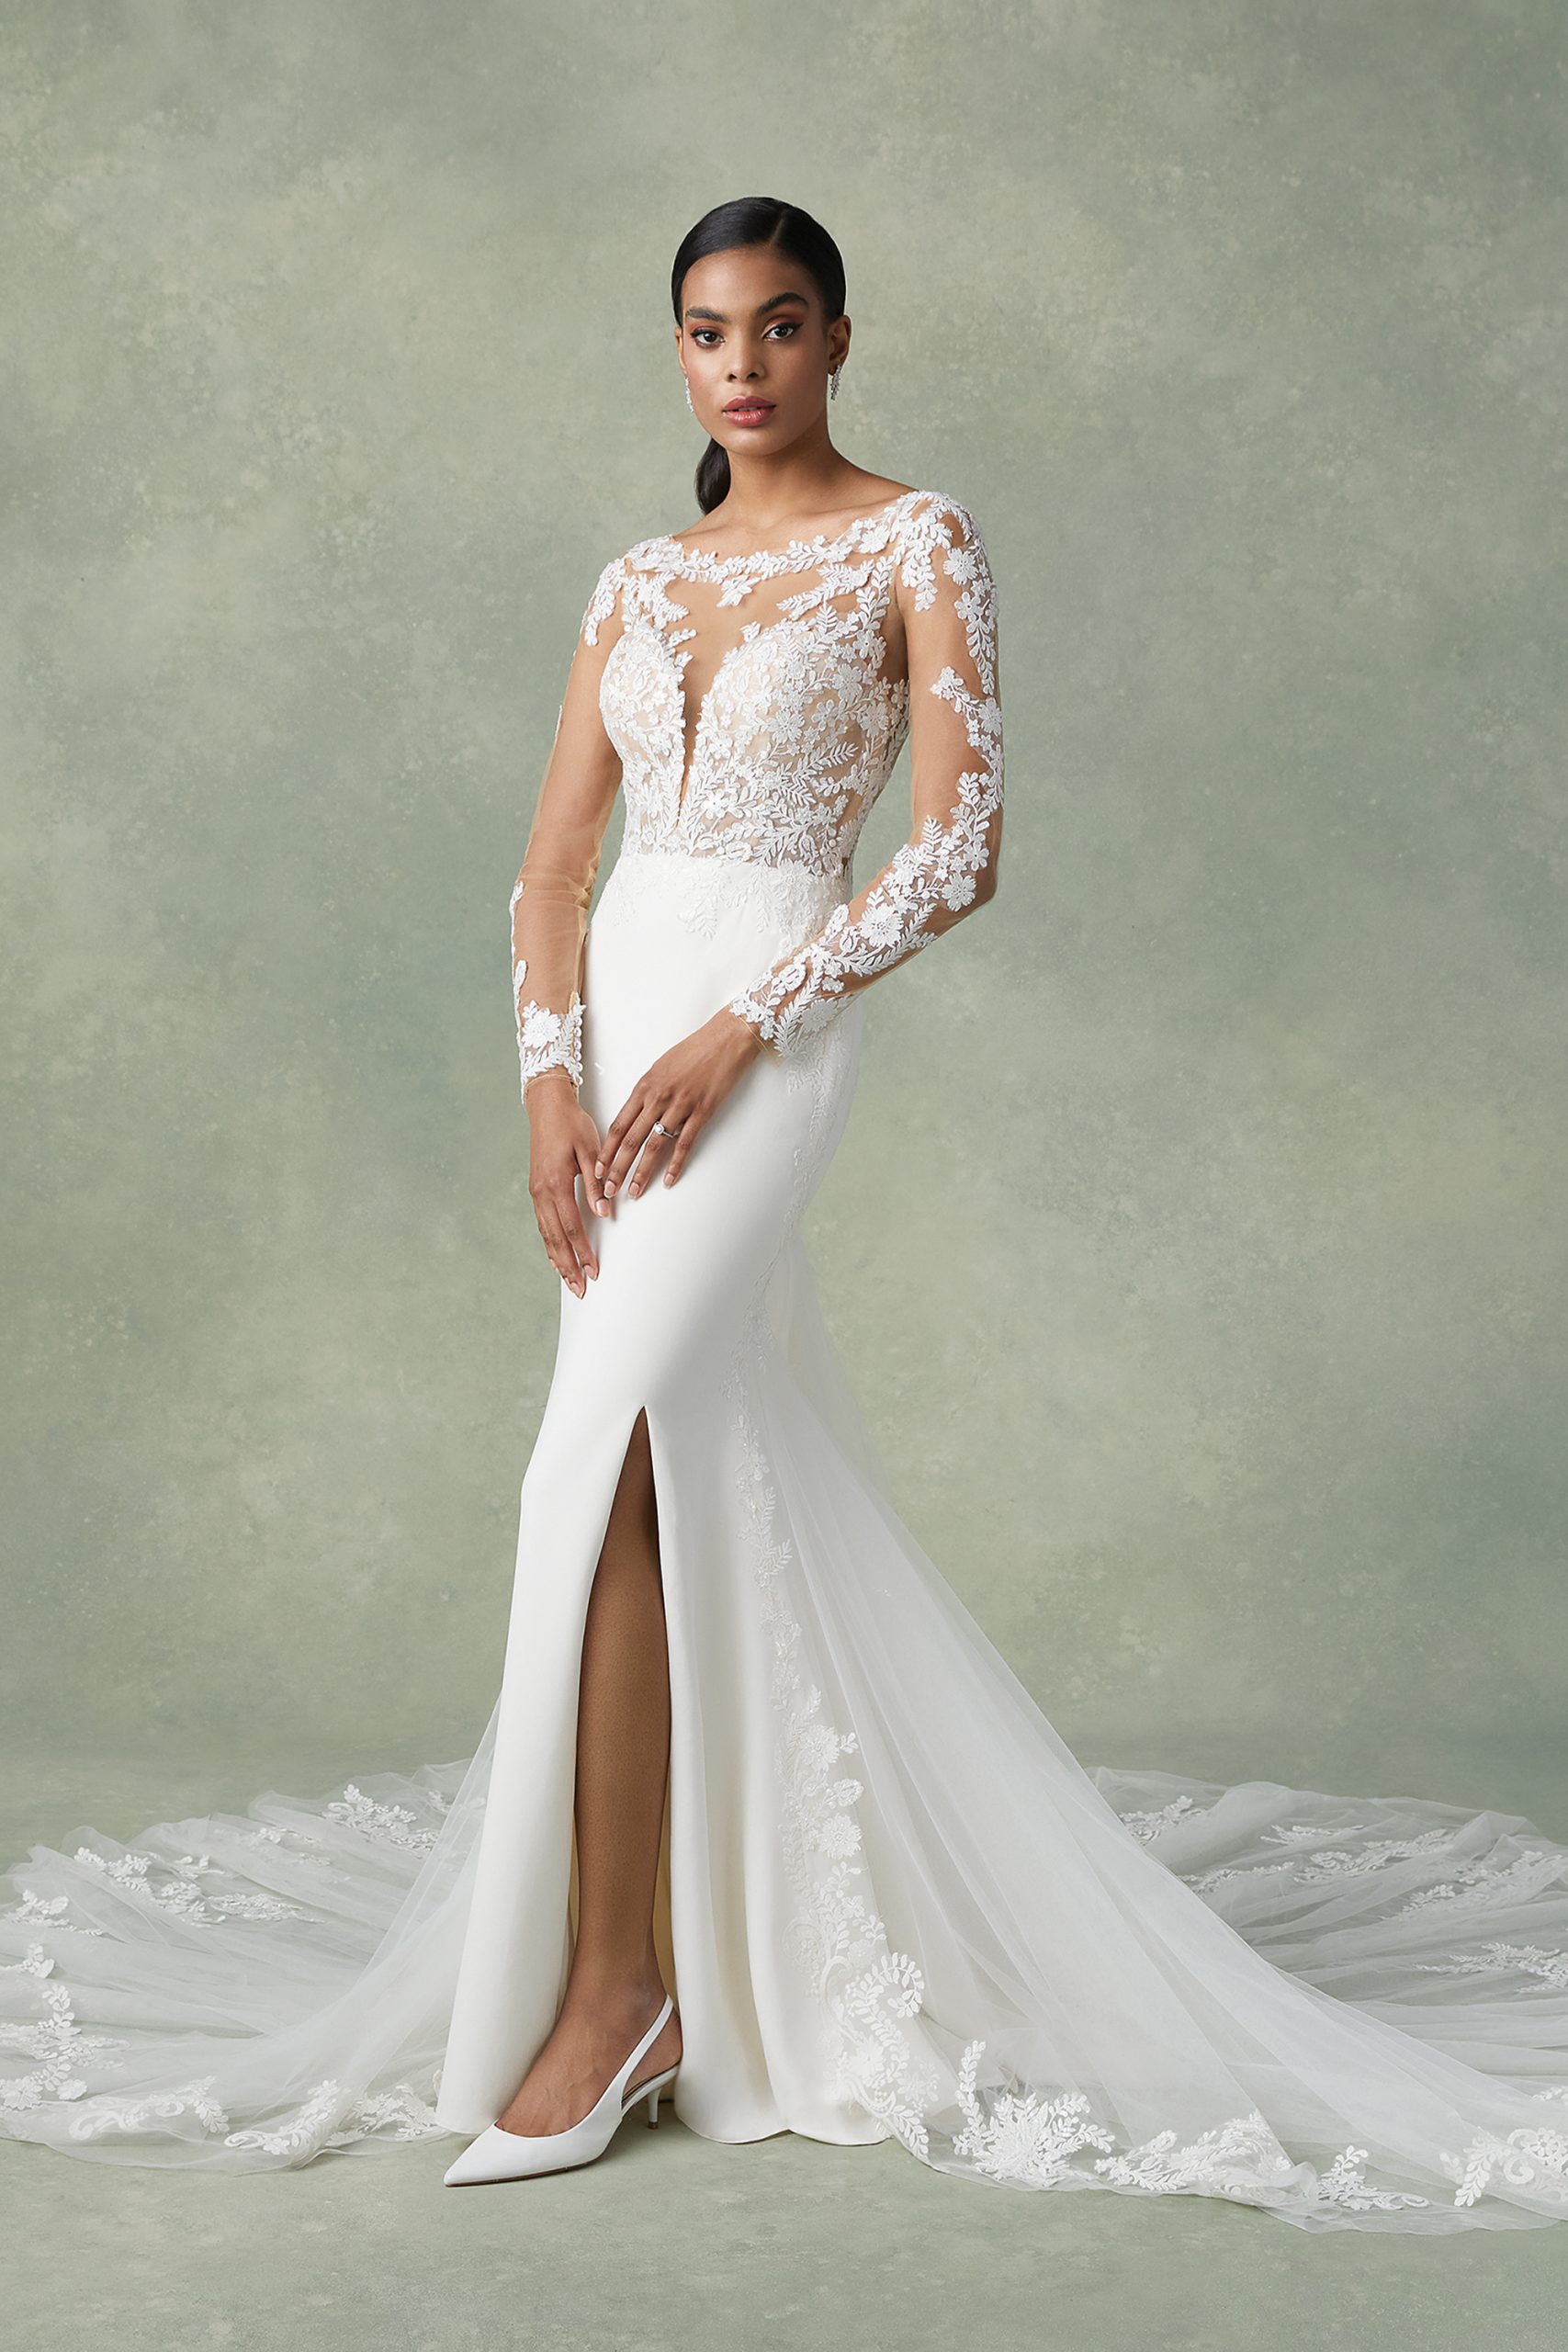 Justin-Alexander-Forrest-Wedding-Dress | PreOwned Wedding Dresses